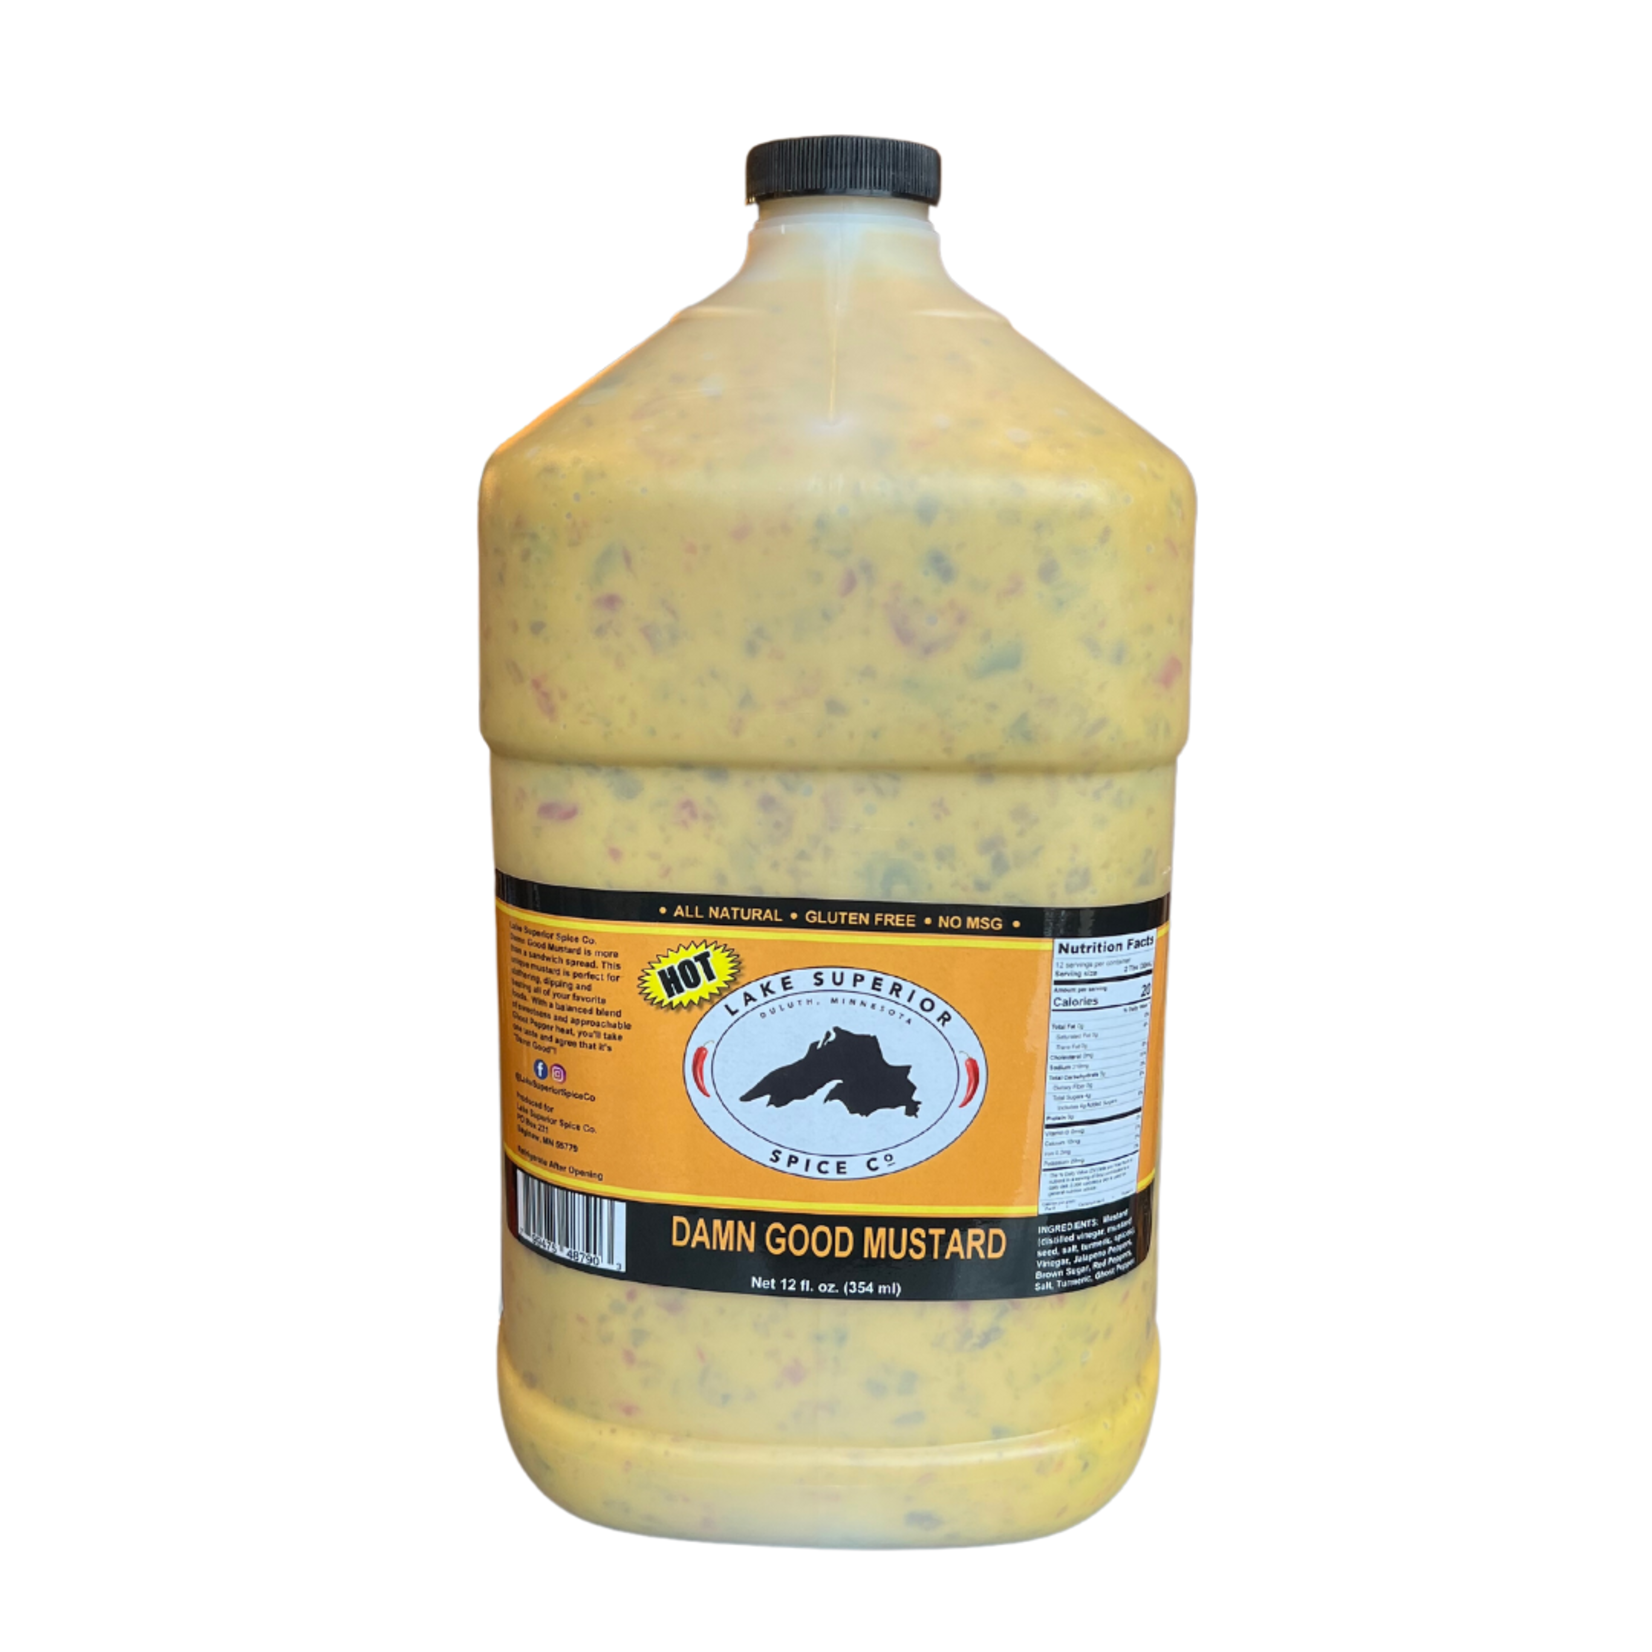 Lake Superior Spice Co Damn Good Mustard, Gallon Jug